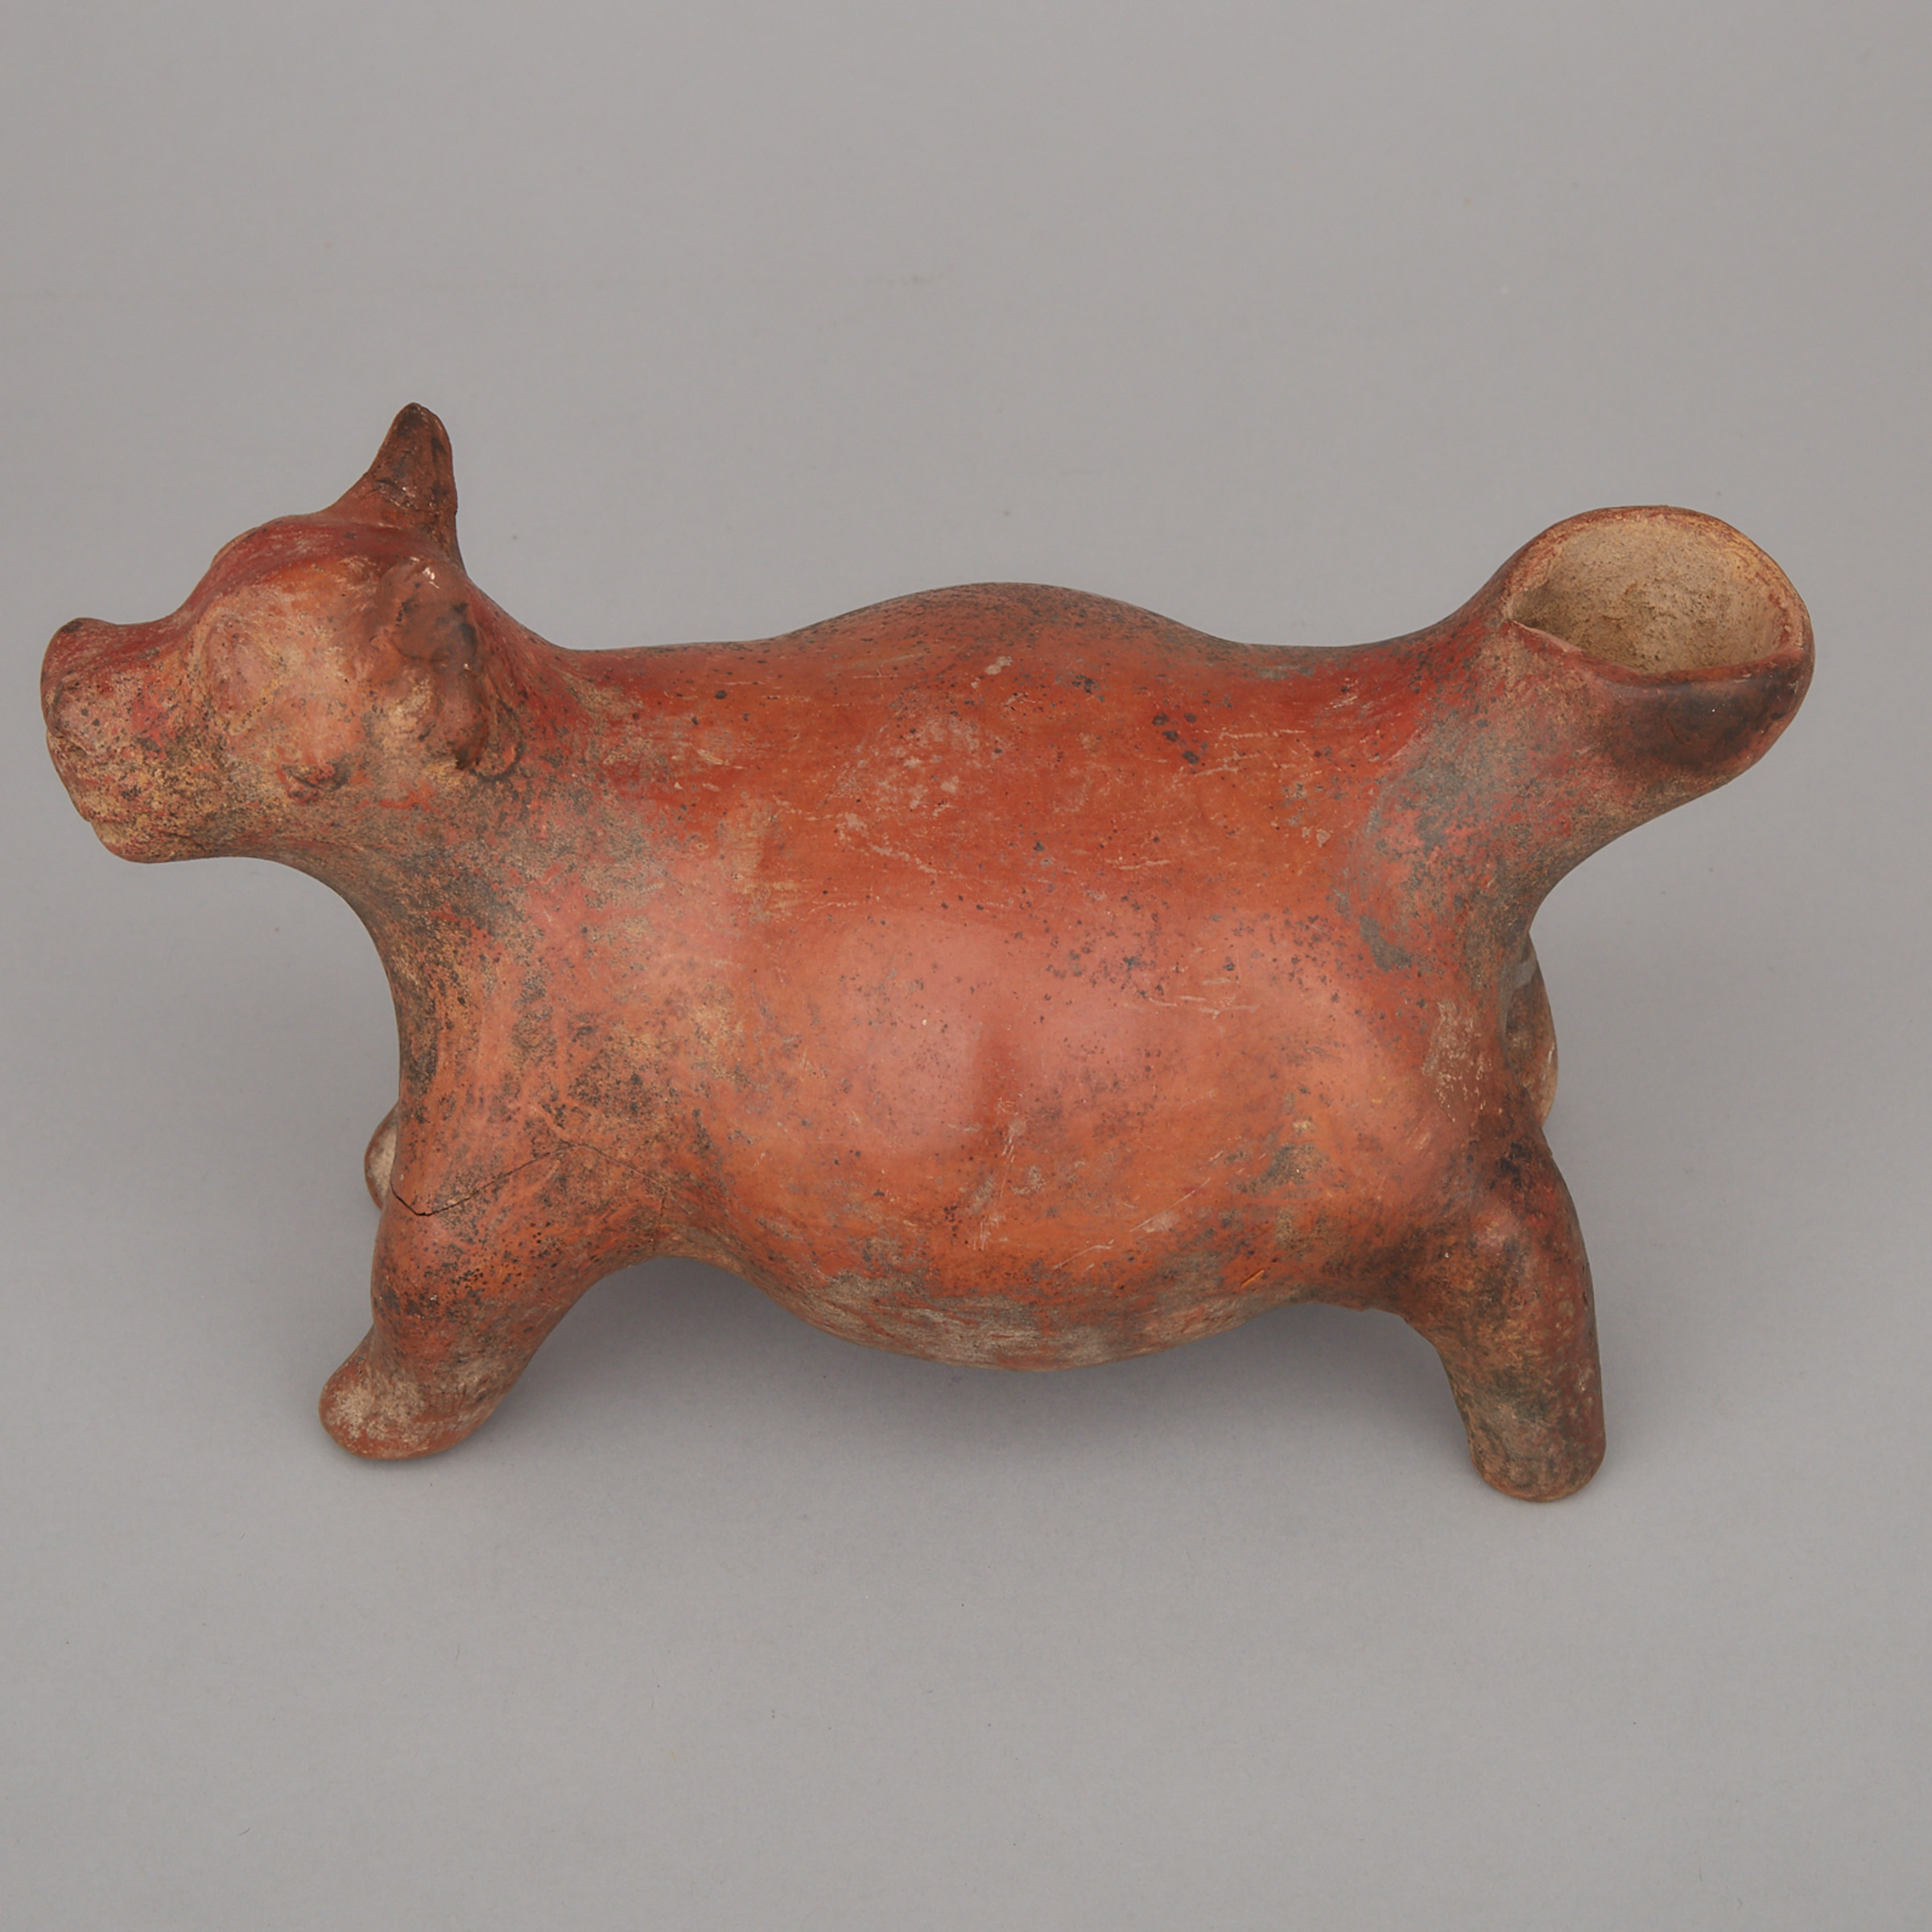 Colima Pottery Dog Form Vessel, Protoclassic Period, 100 B.C.-250 A.D.